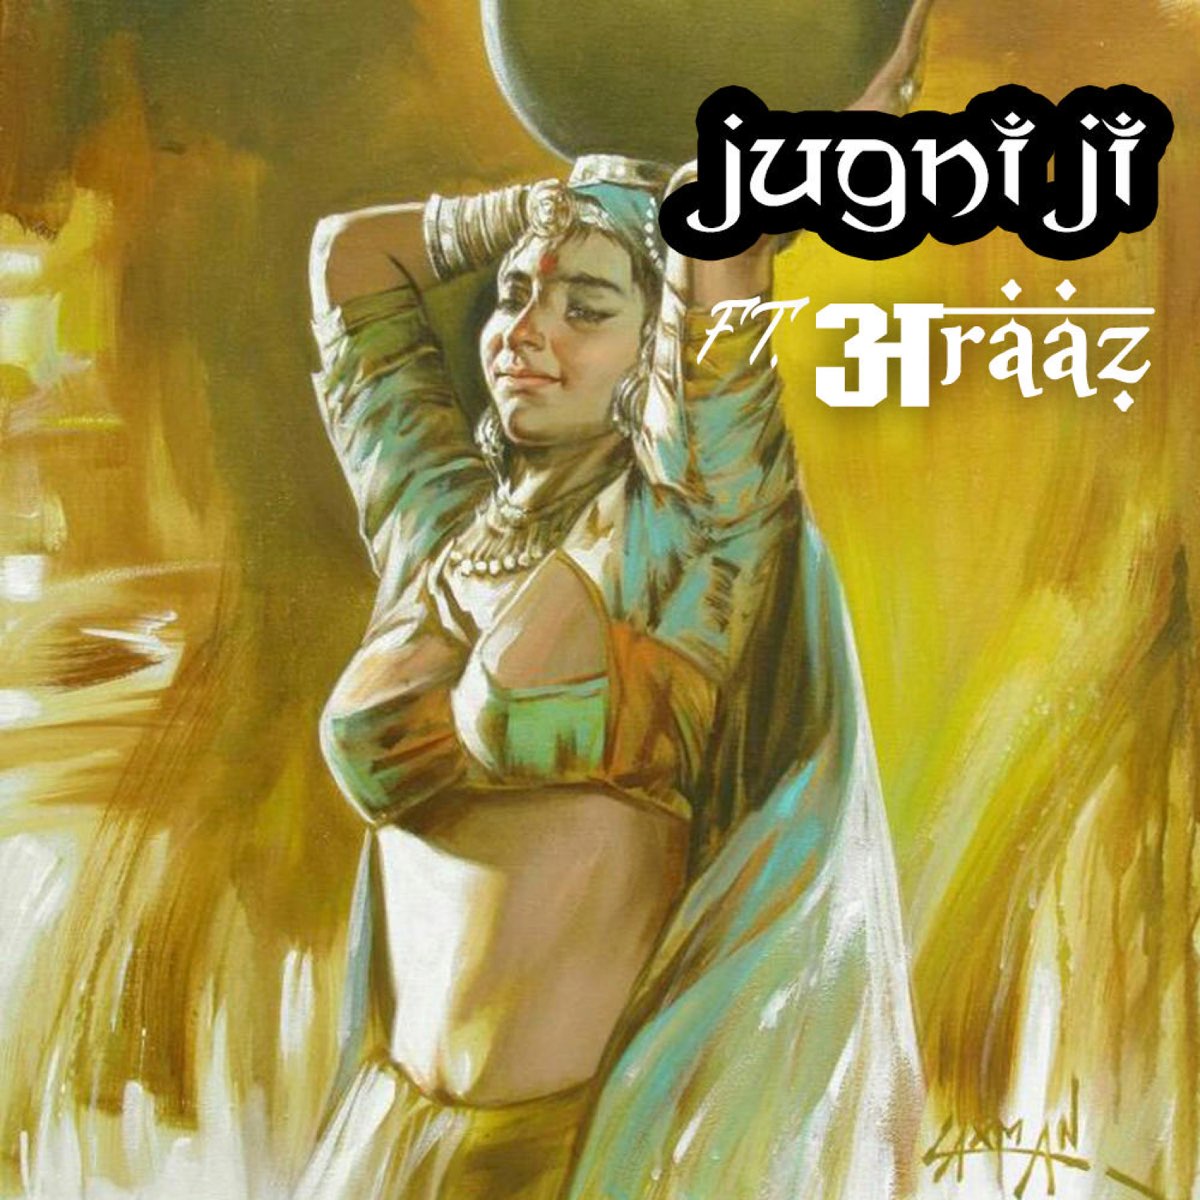 Jugni Ji - Single - Album by Araaz - Apple Music